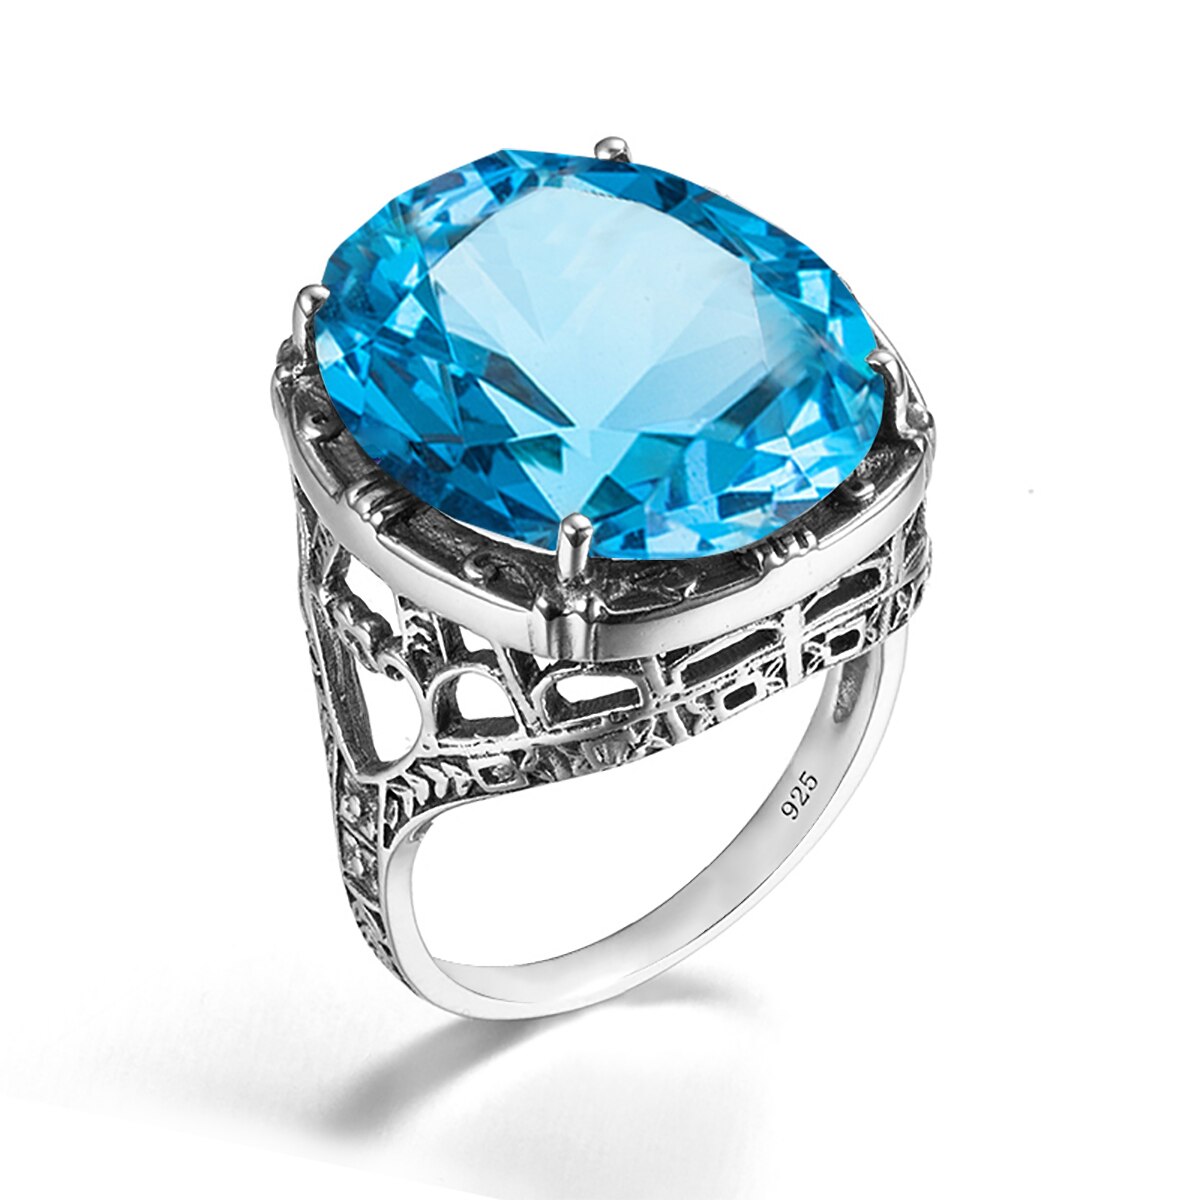 Real 925 Silver Women Amethyst Gemstone Ring Wedding Rings Handmade Processing Victorian Antique Jewelry Blue Topaz